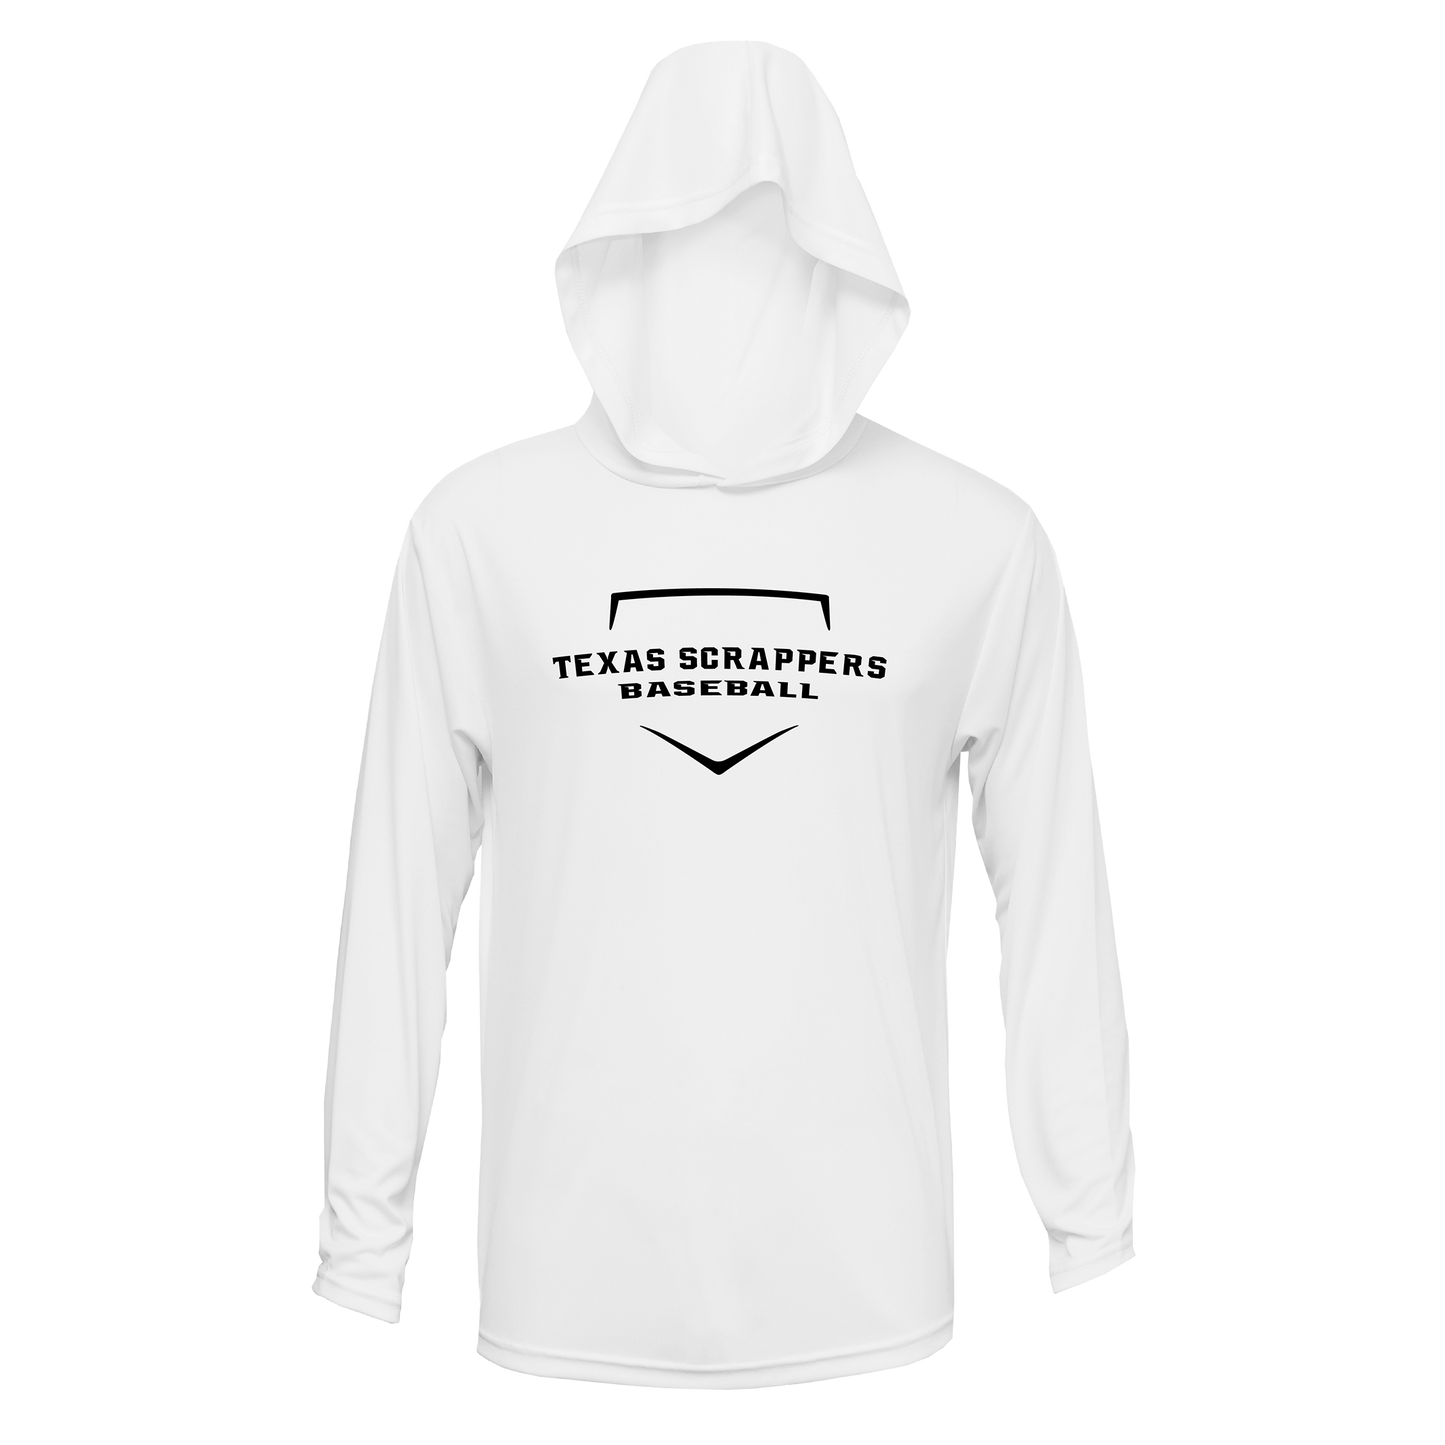 Youth Xtreme-Tek White Long Sleeve Hoodie W/ Black Logo